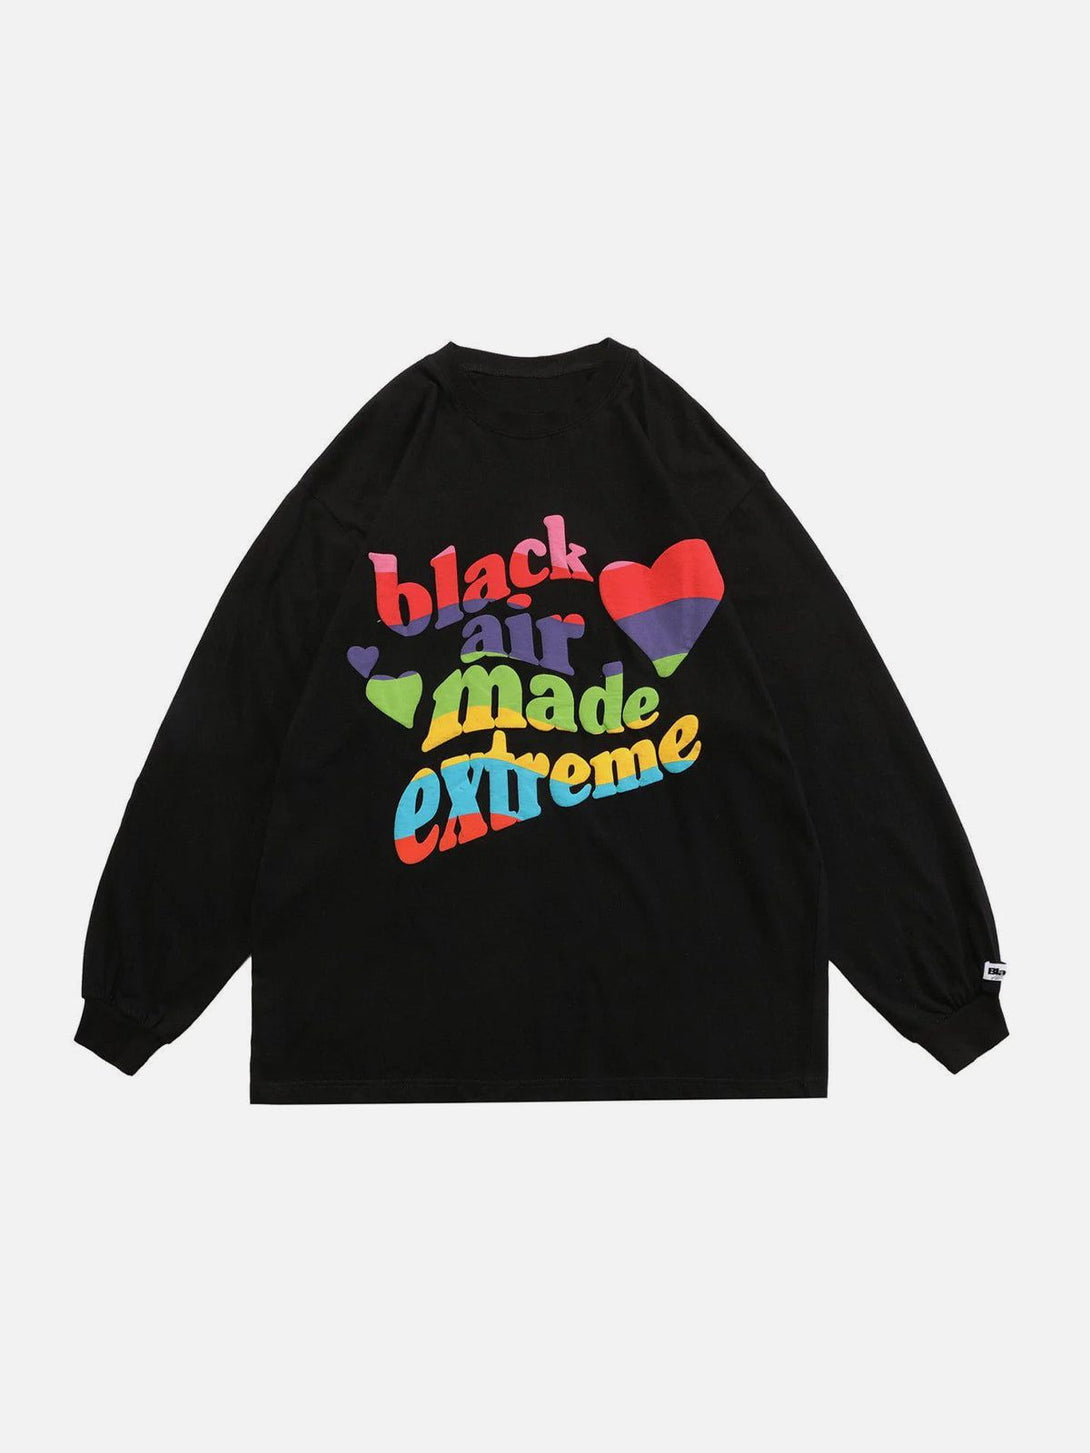 Majesda® - Letter Heart Graphic Sweatshirt outfit ideas streetwear fashion